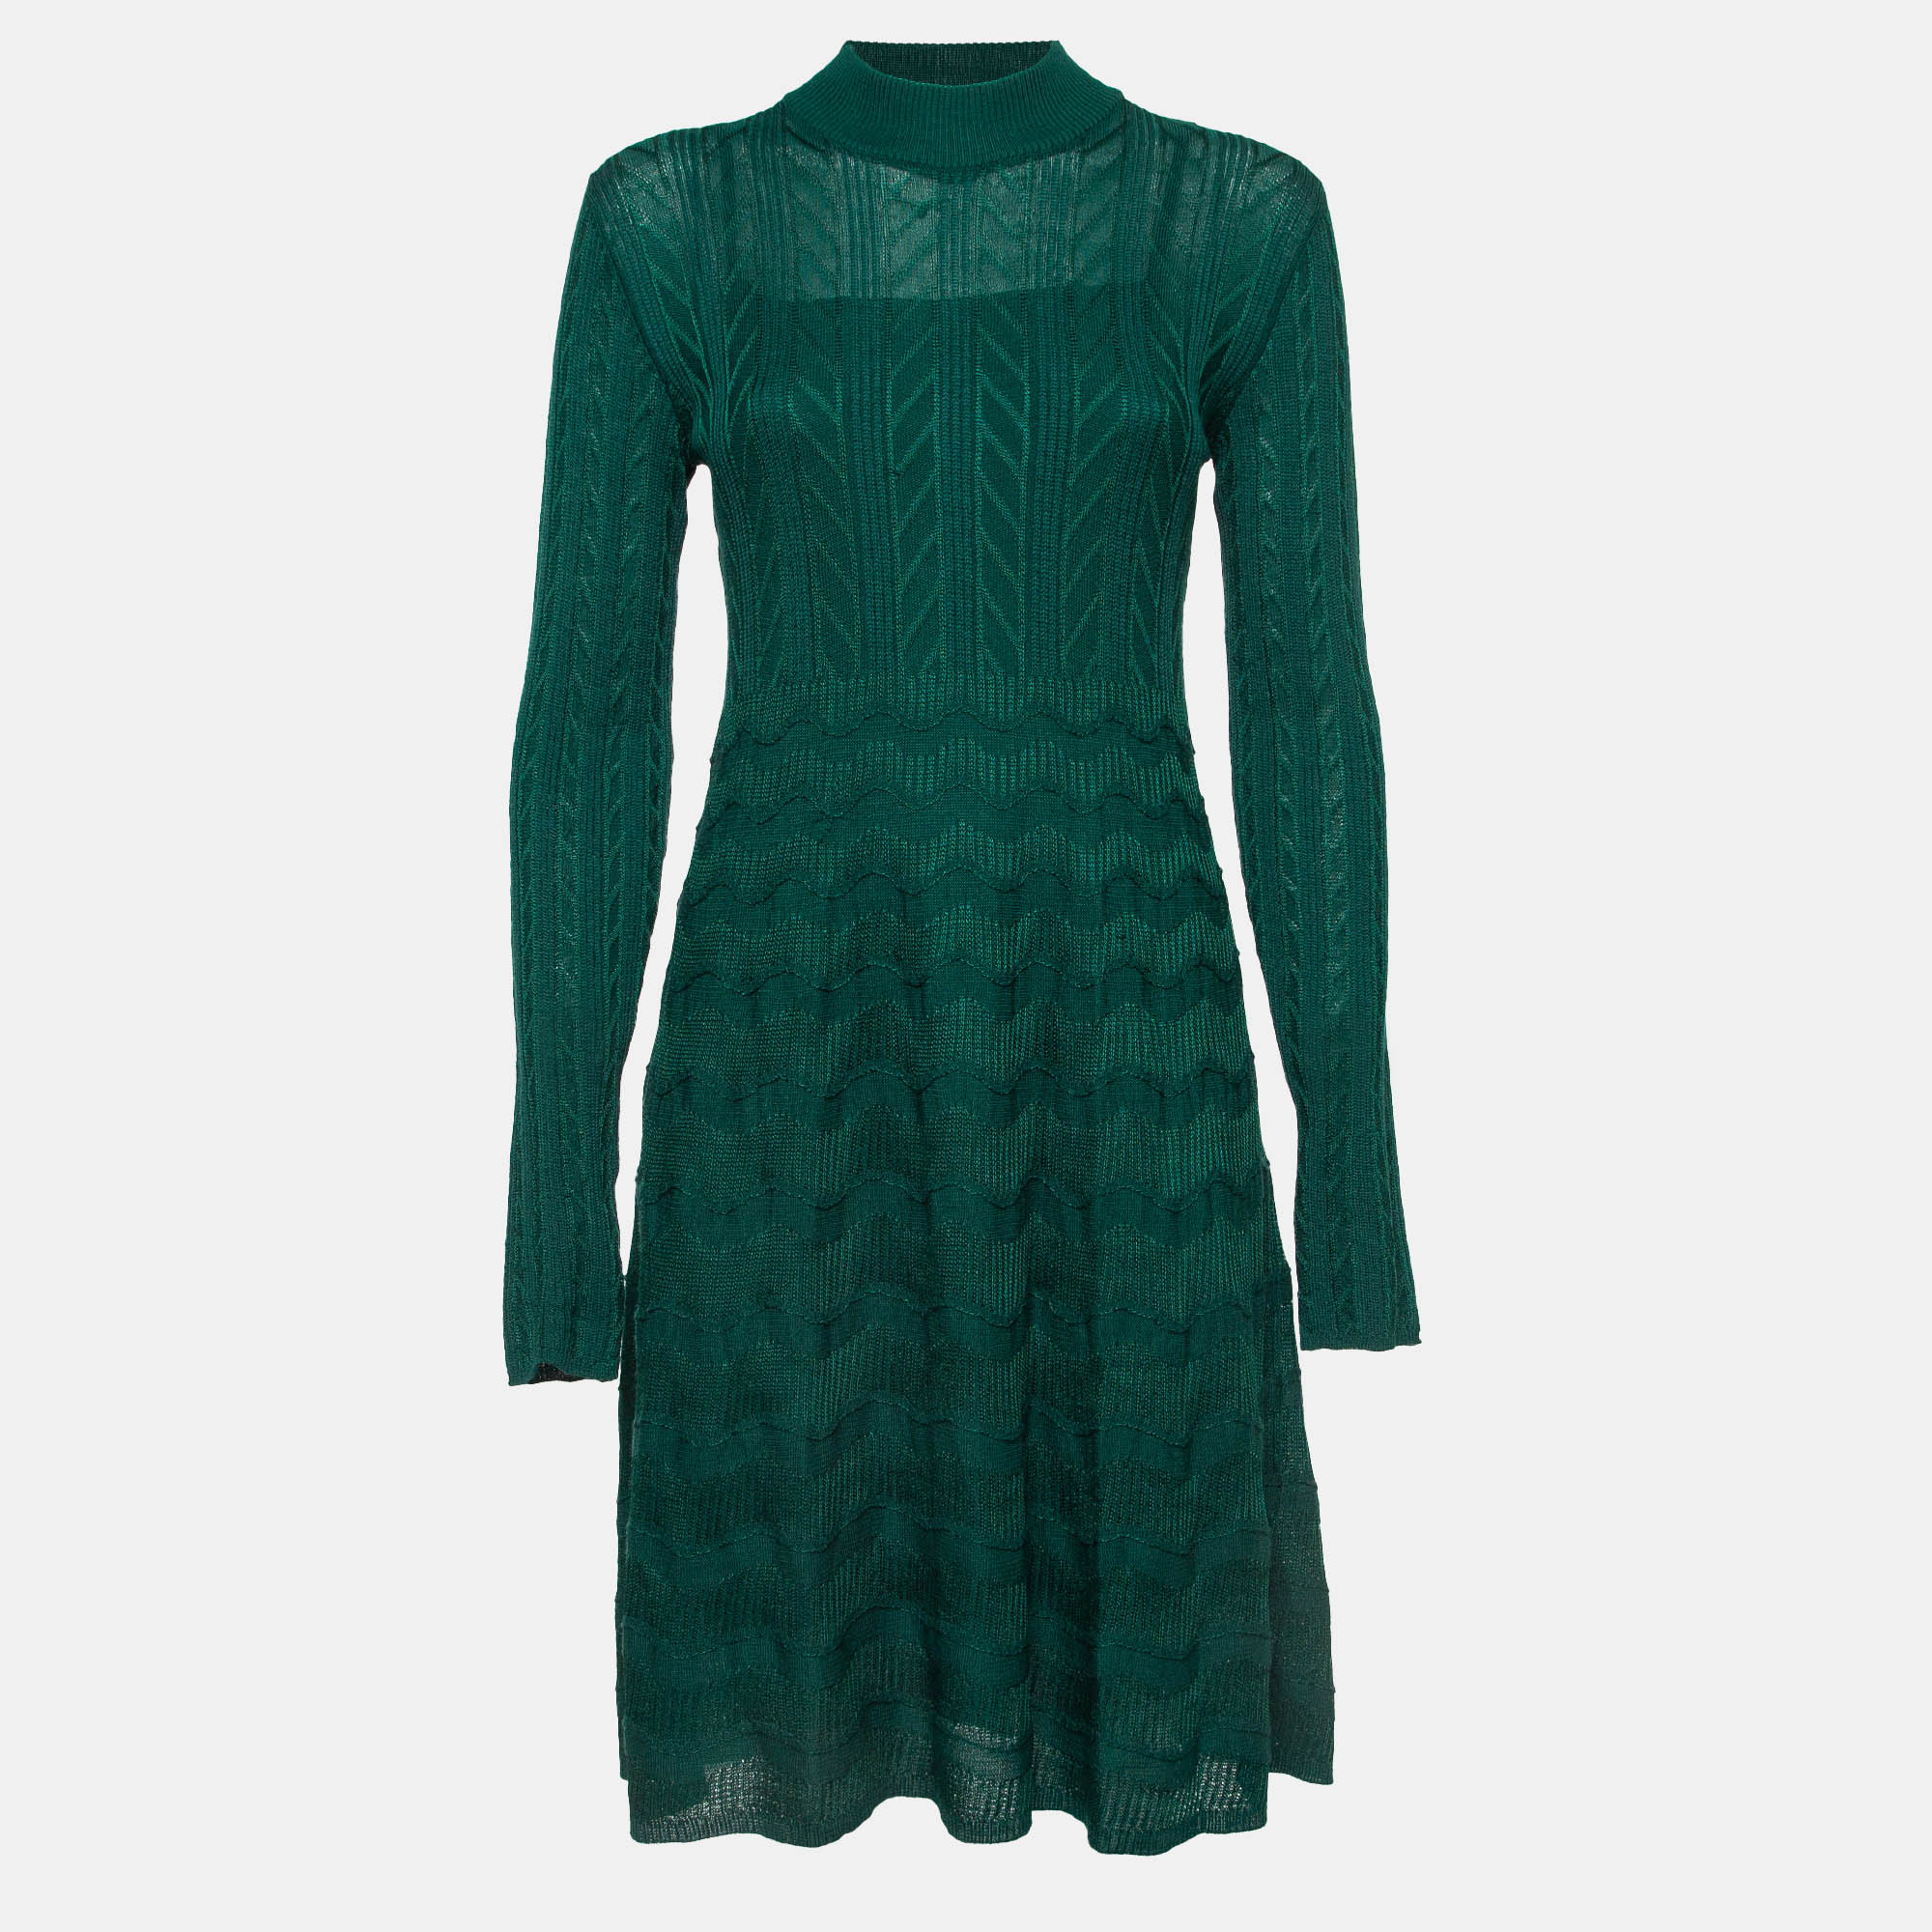 M missoni green cable knit mock neck short dress m